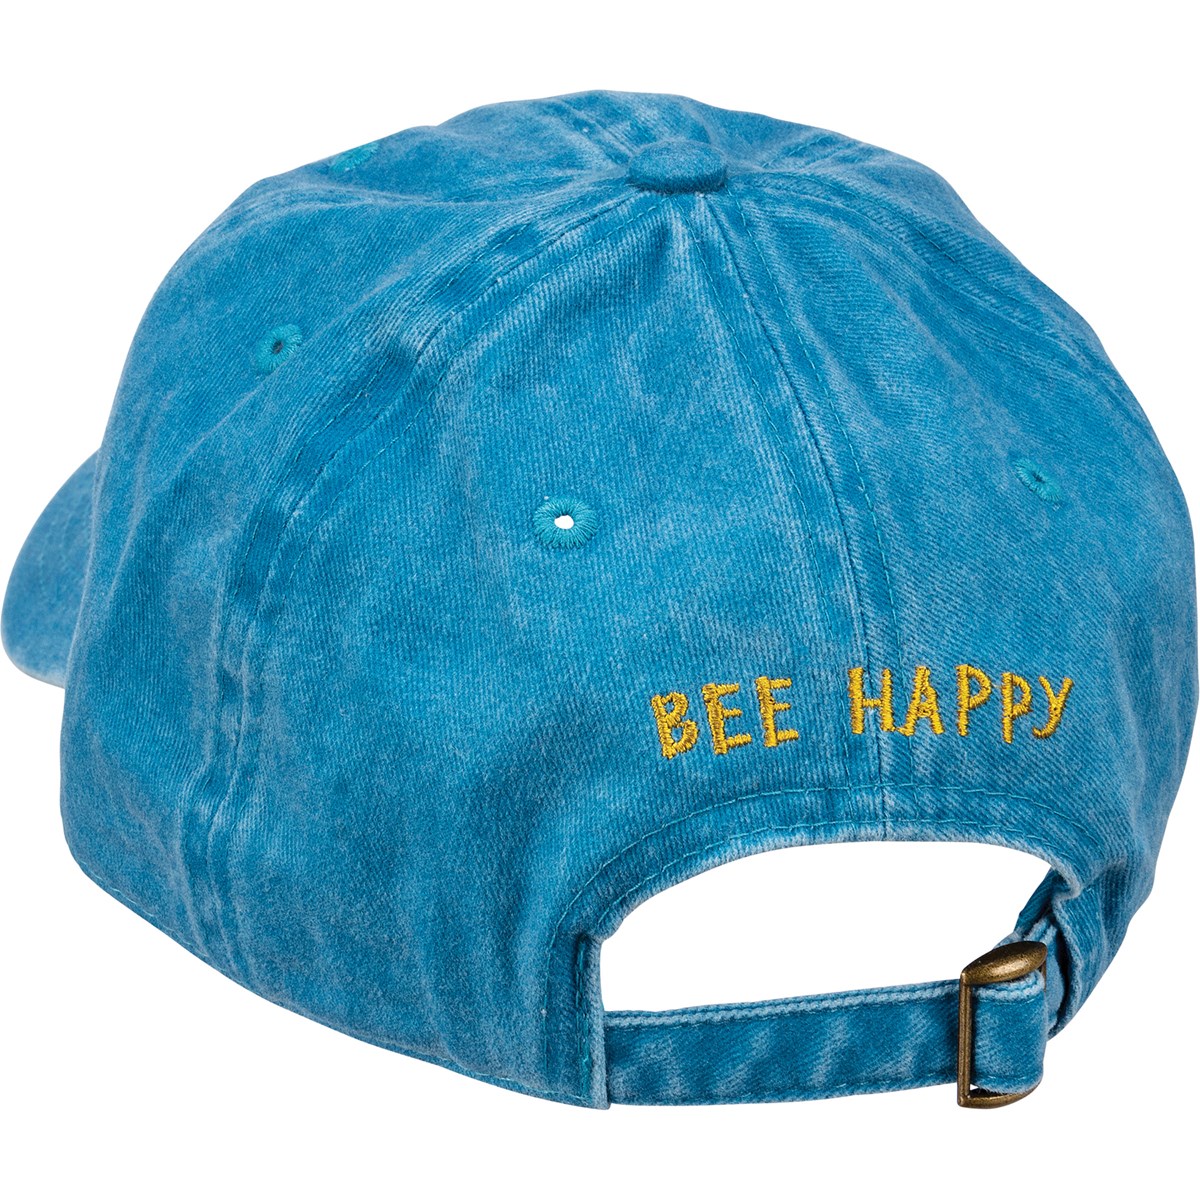 Bee Happy Baseball Cap - Cotton, Metal